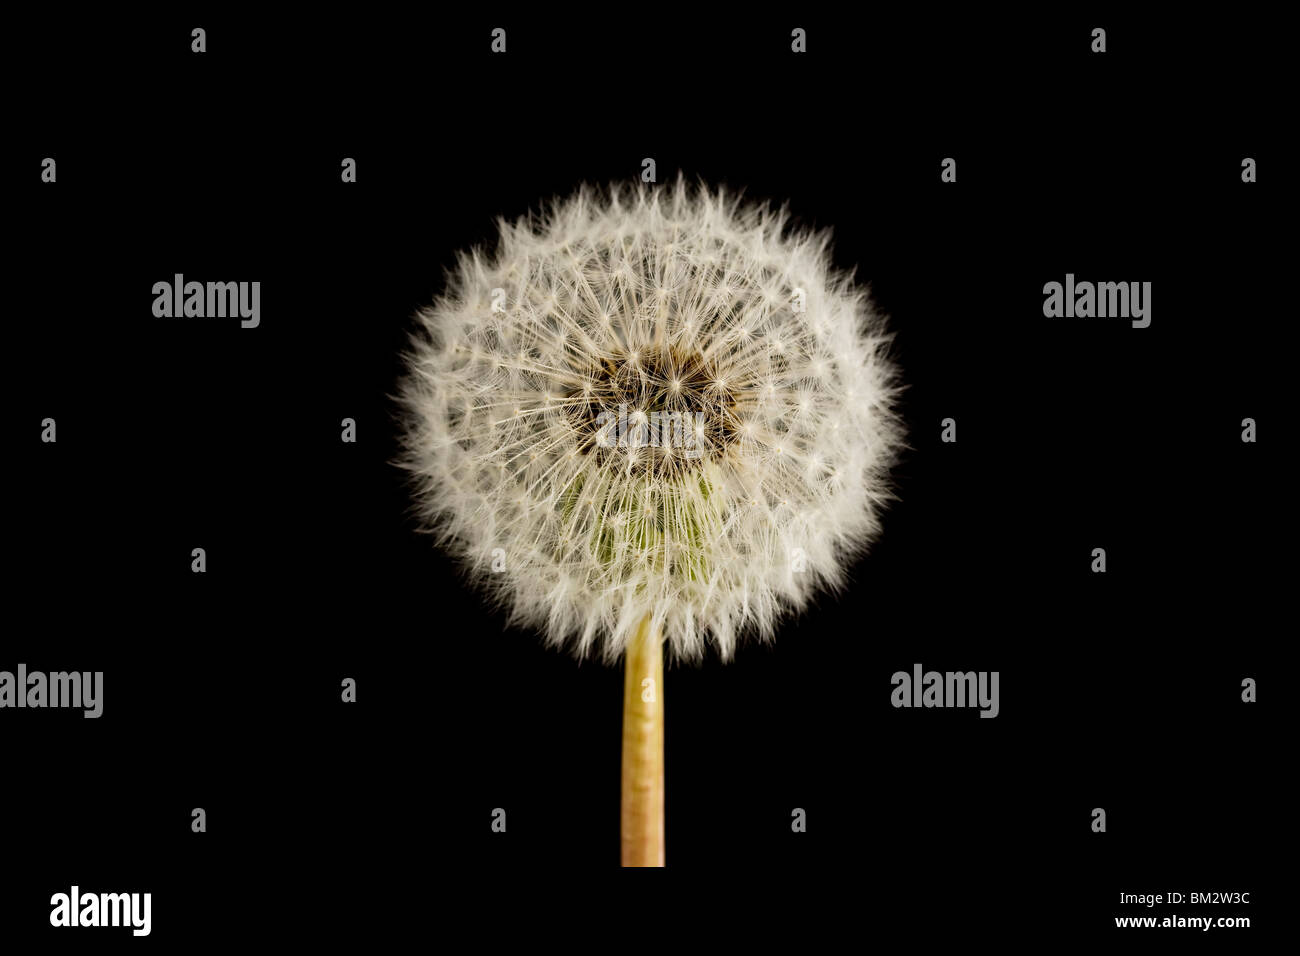 dandelion seed head clock on a black background Stock Photo